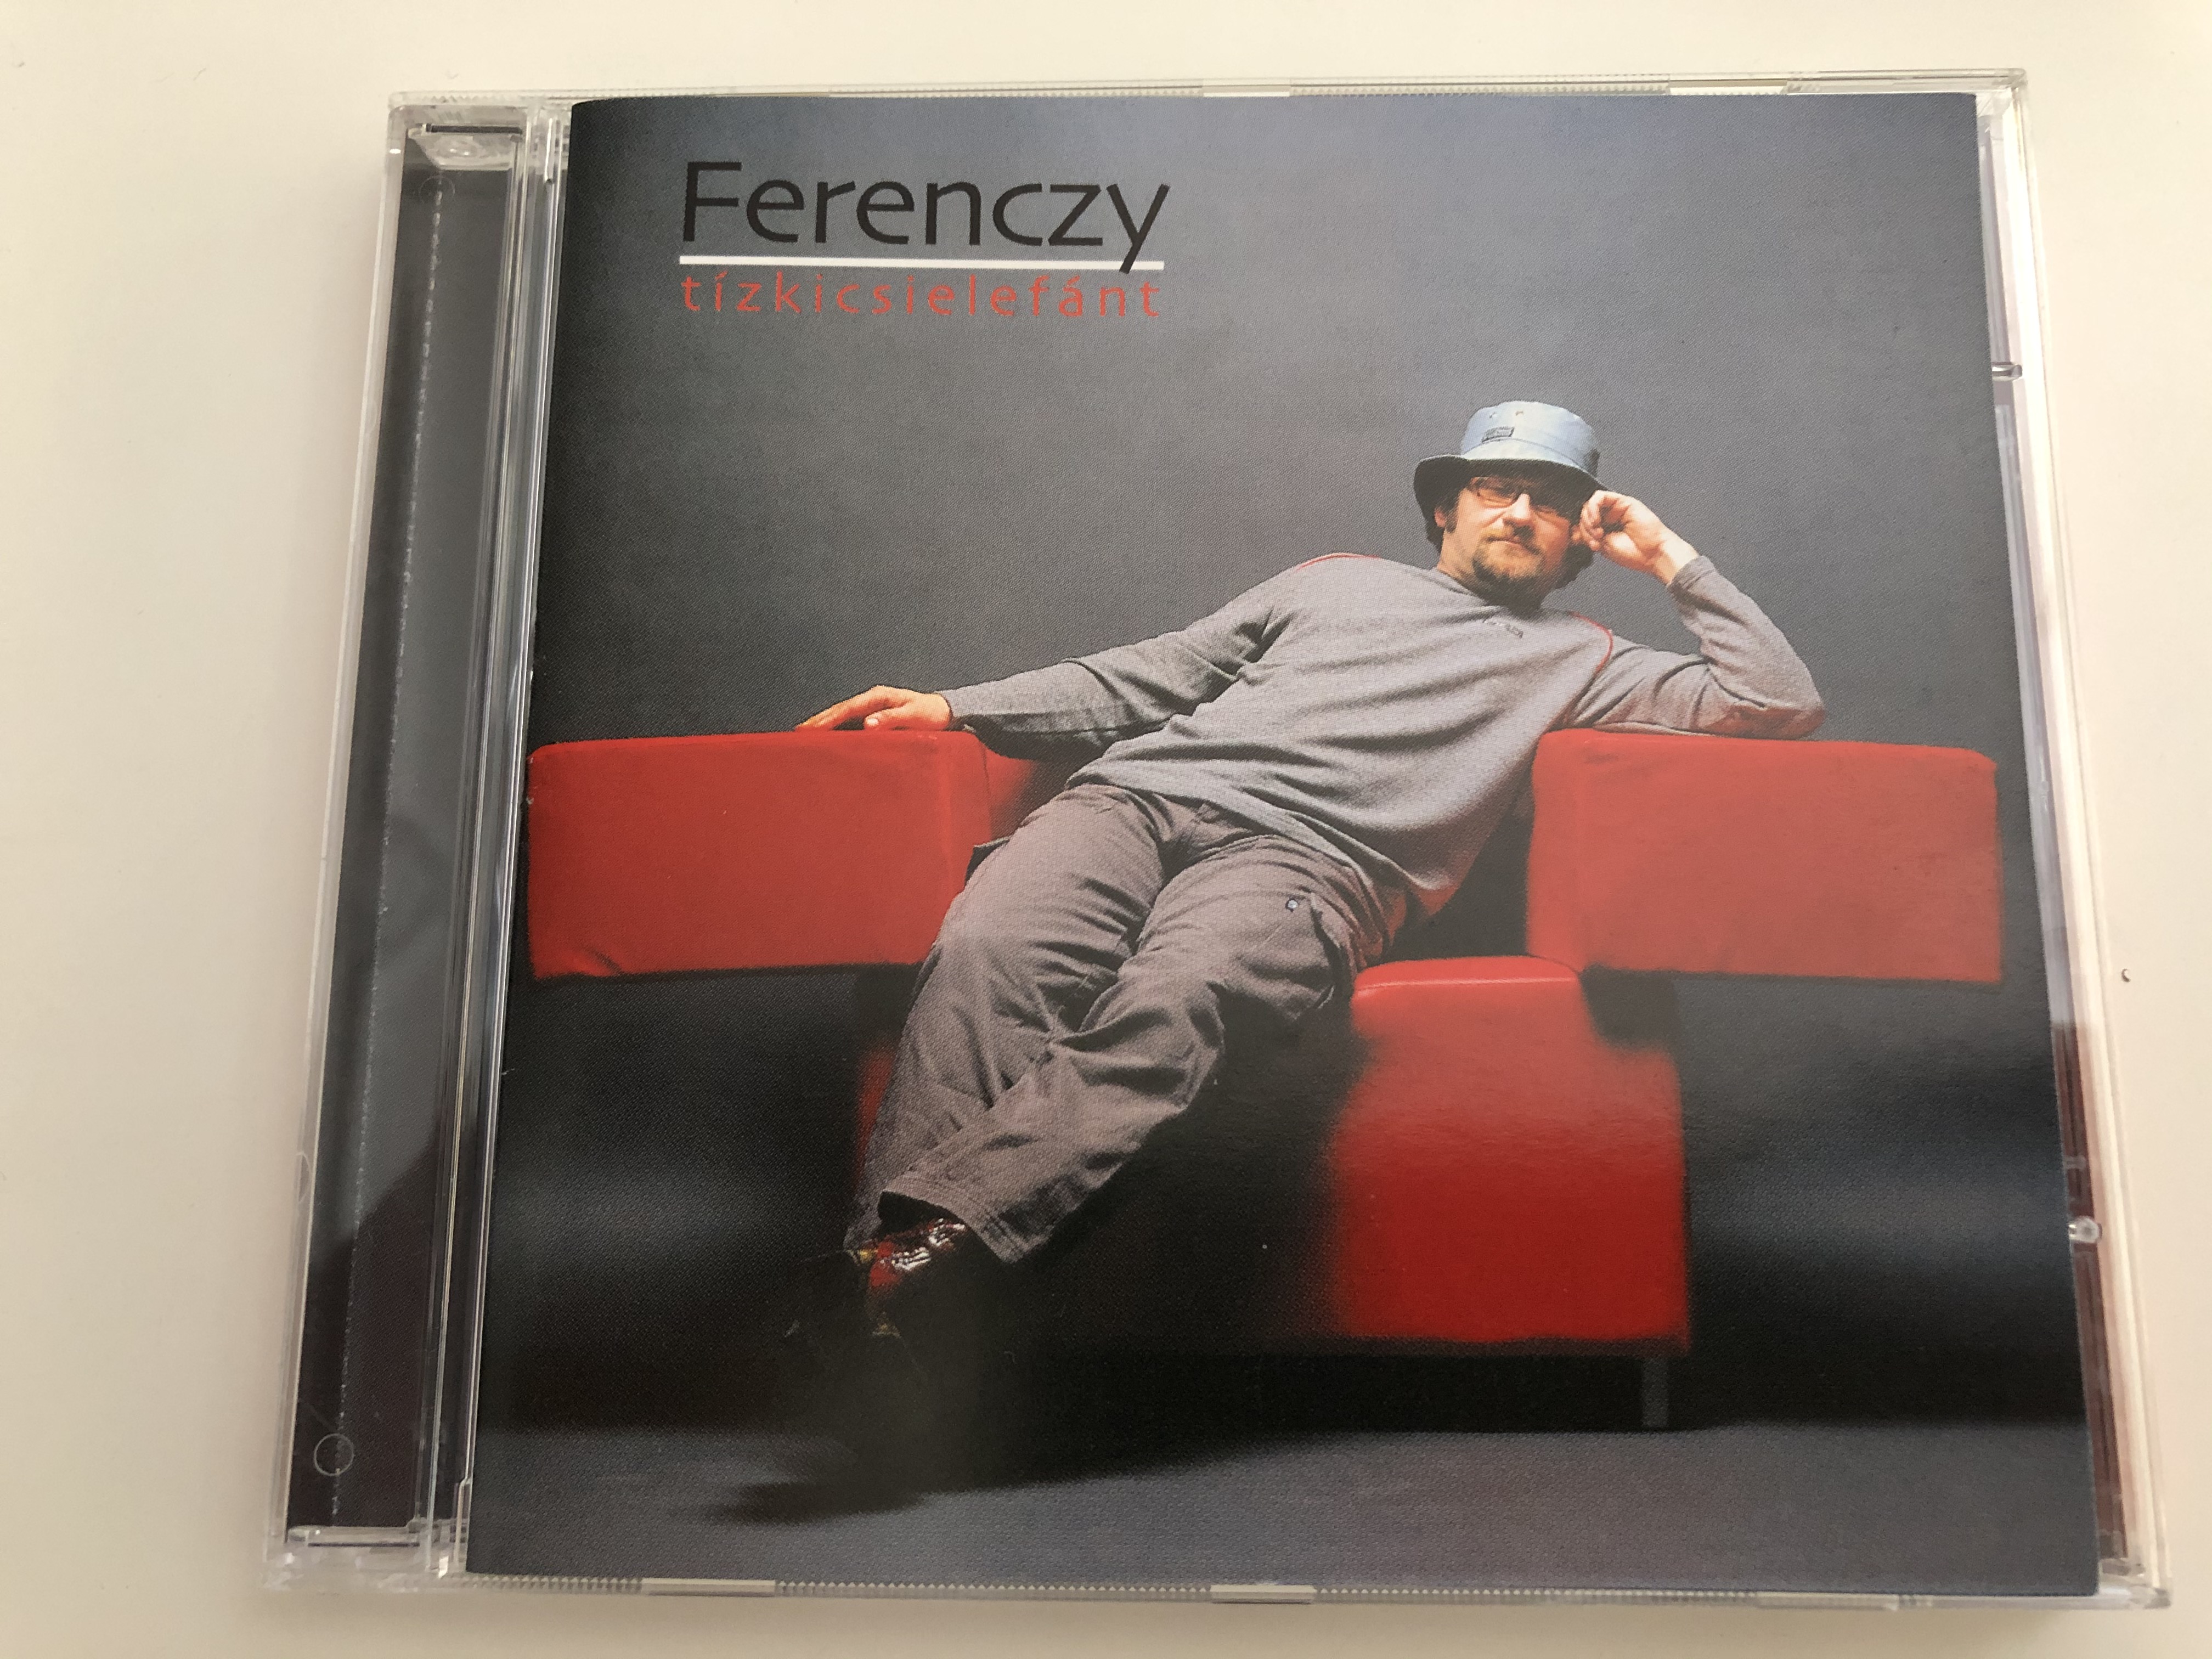 ferenczy-t-zkicsielef-nt-presidance-records-audio-cd-2000-fercd-00100-1-.jpg